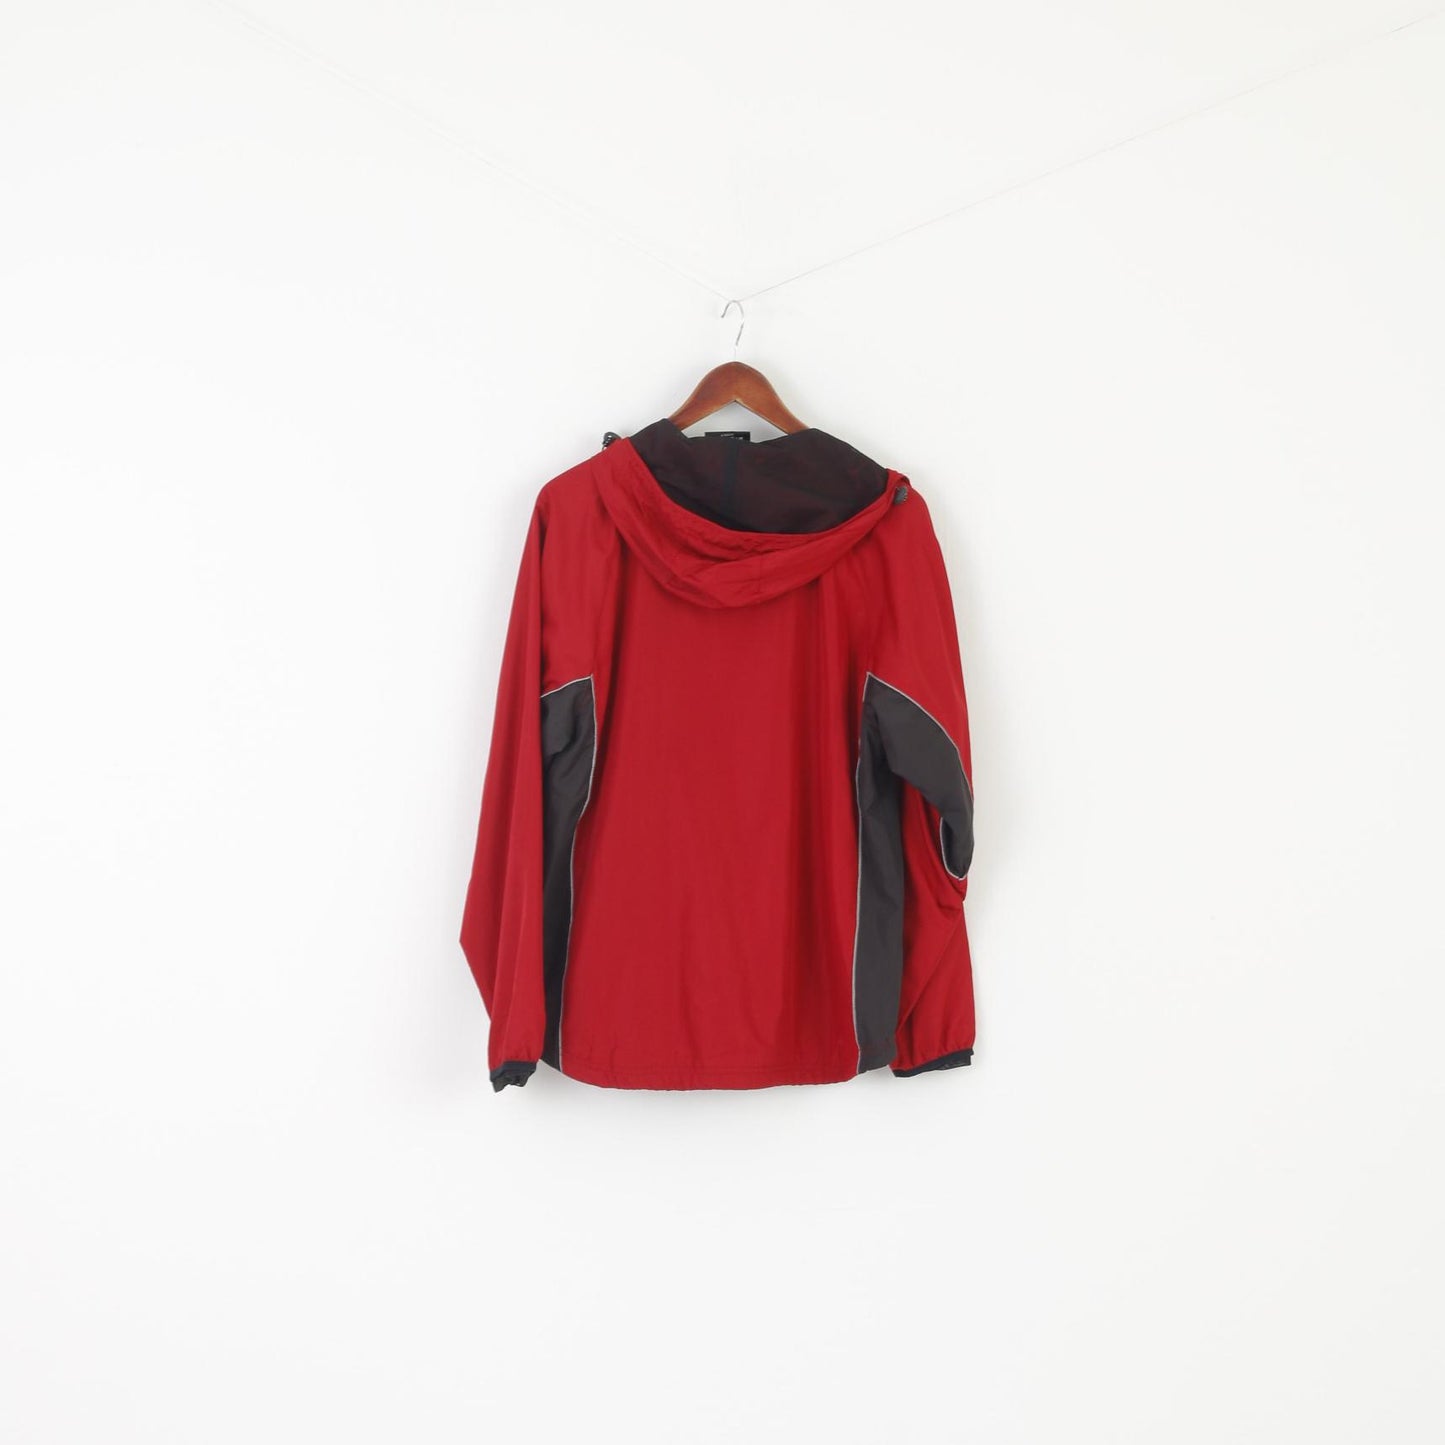 Bagheera Women M Jacket Red Hooded Windcheater Zip Up Reflective Sport Top